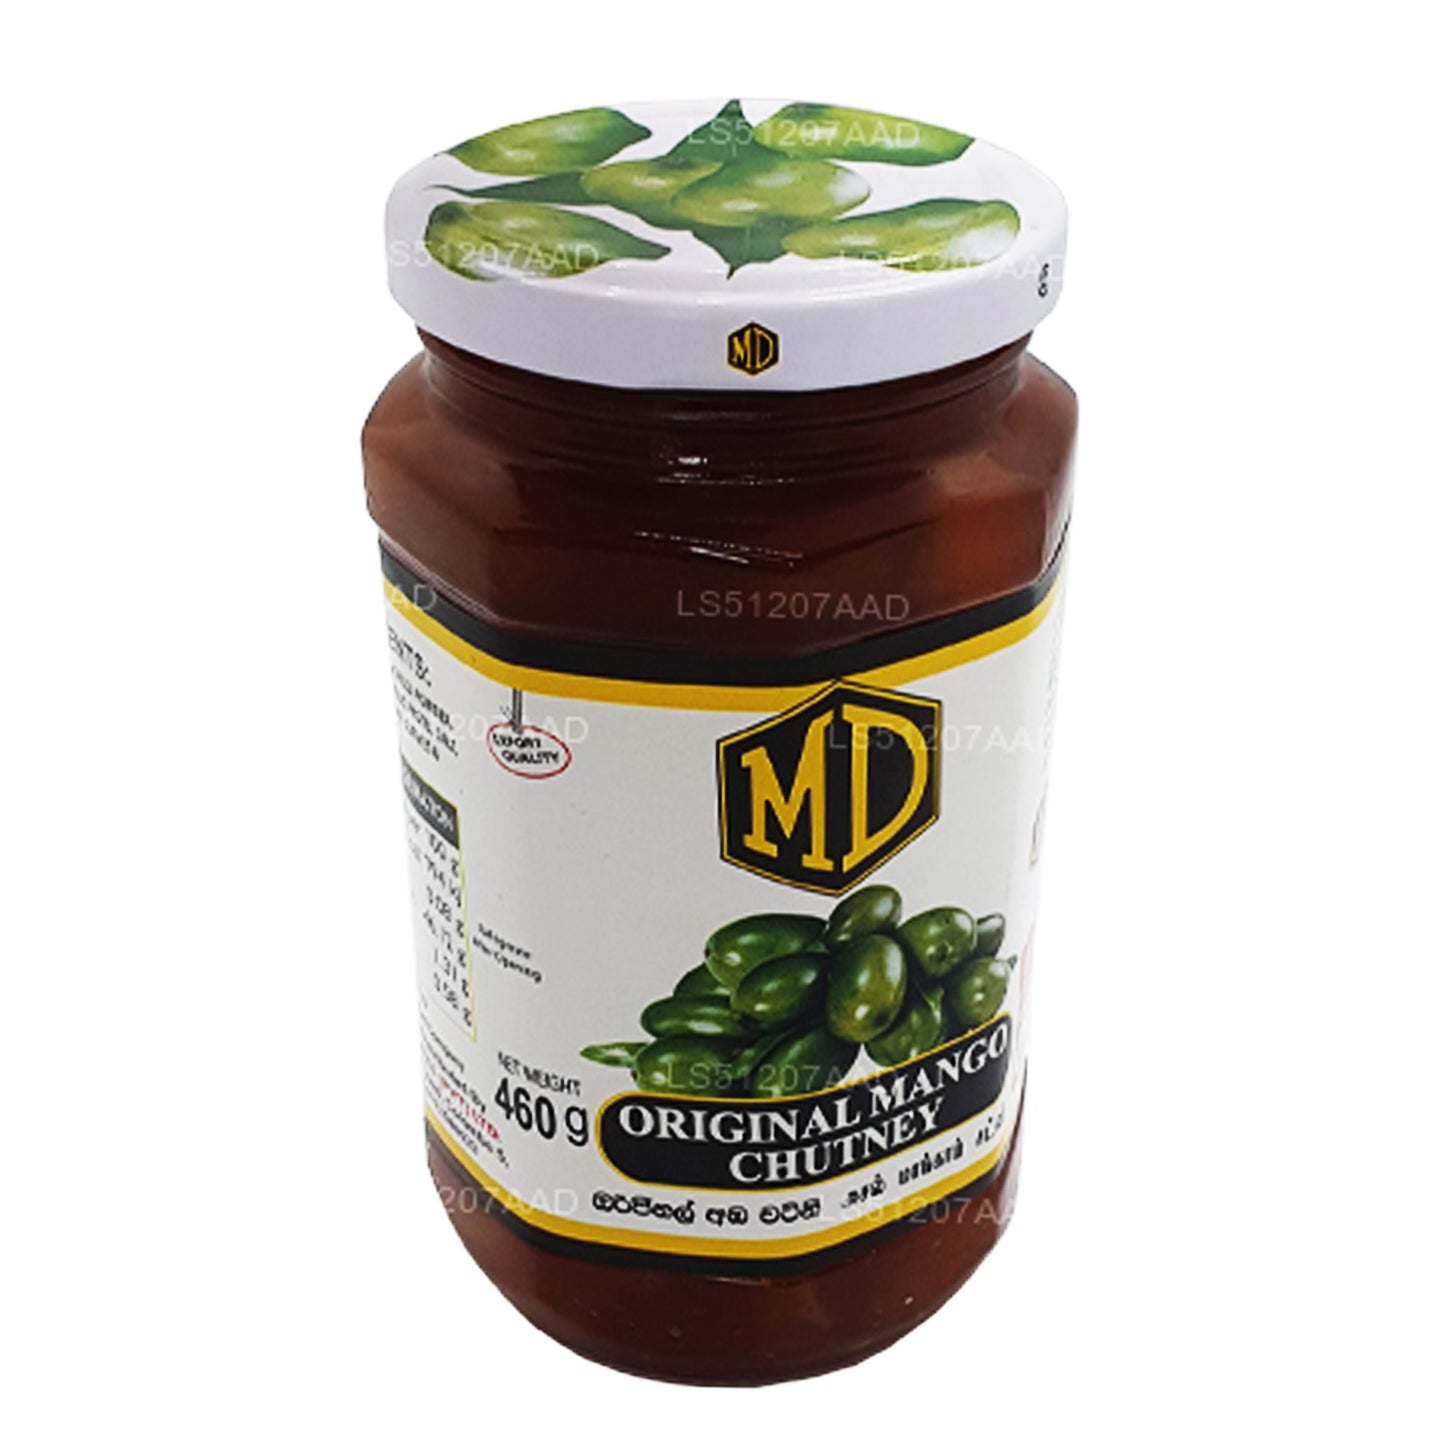 MD Original Mango Chutney (460g)